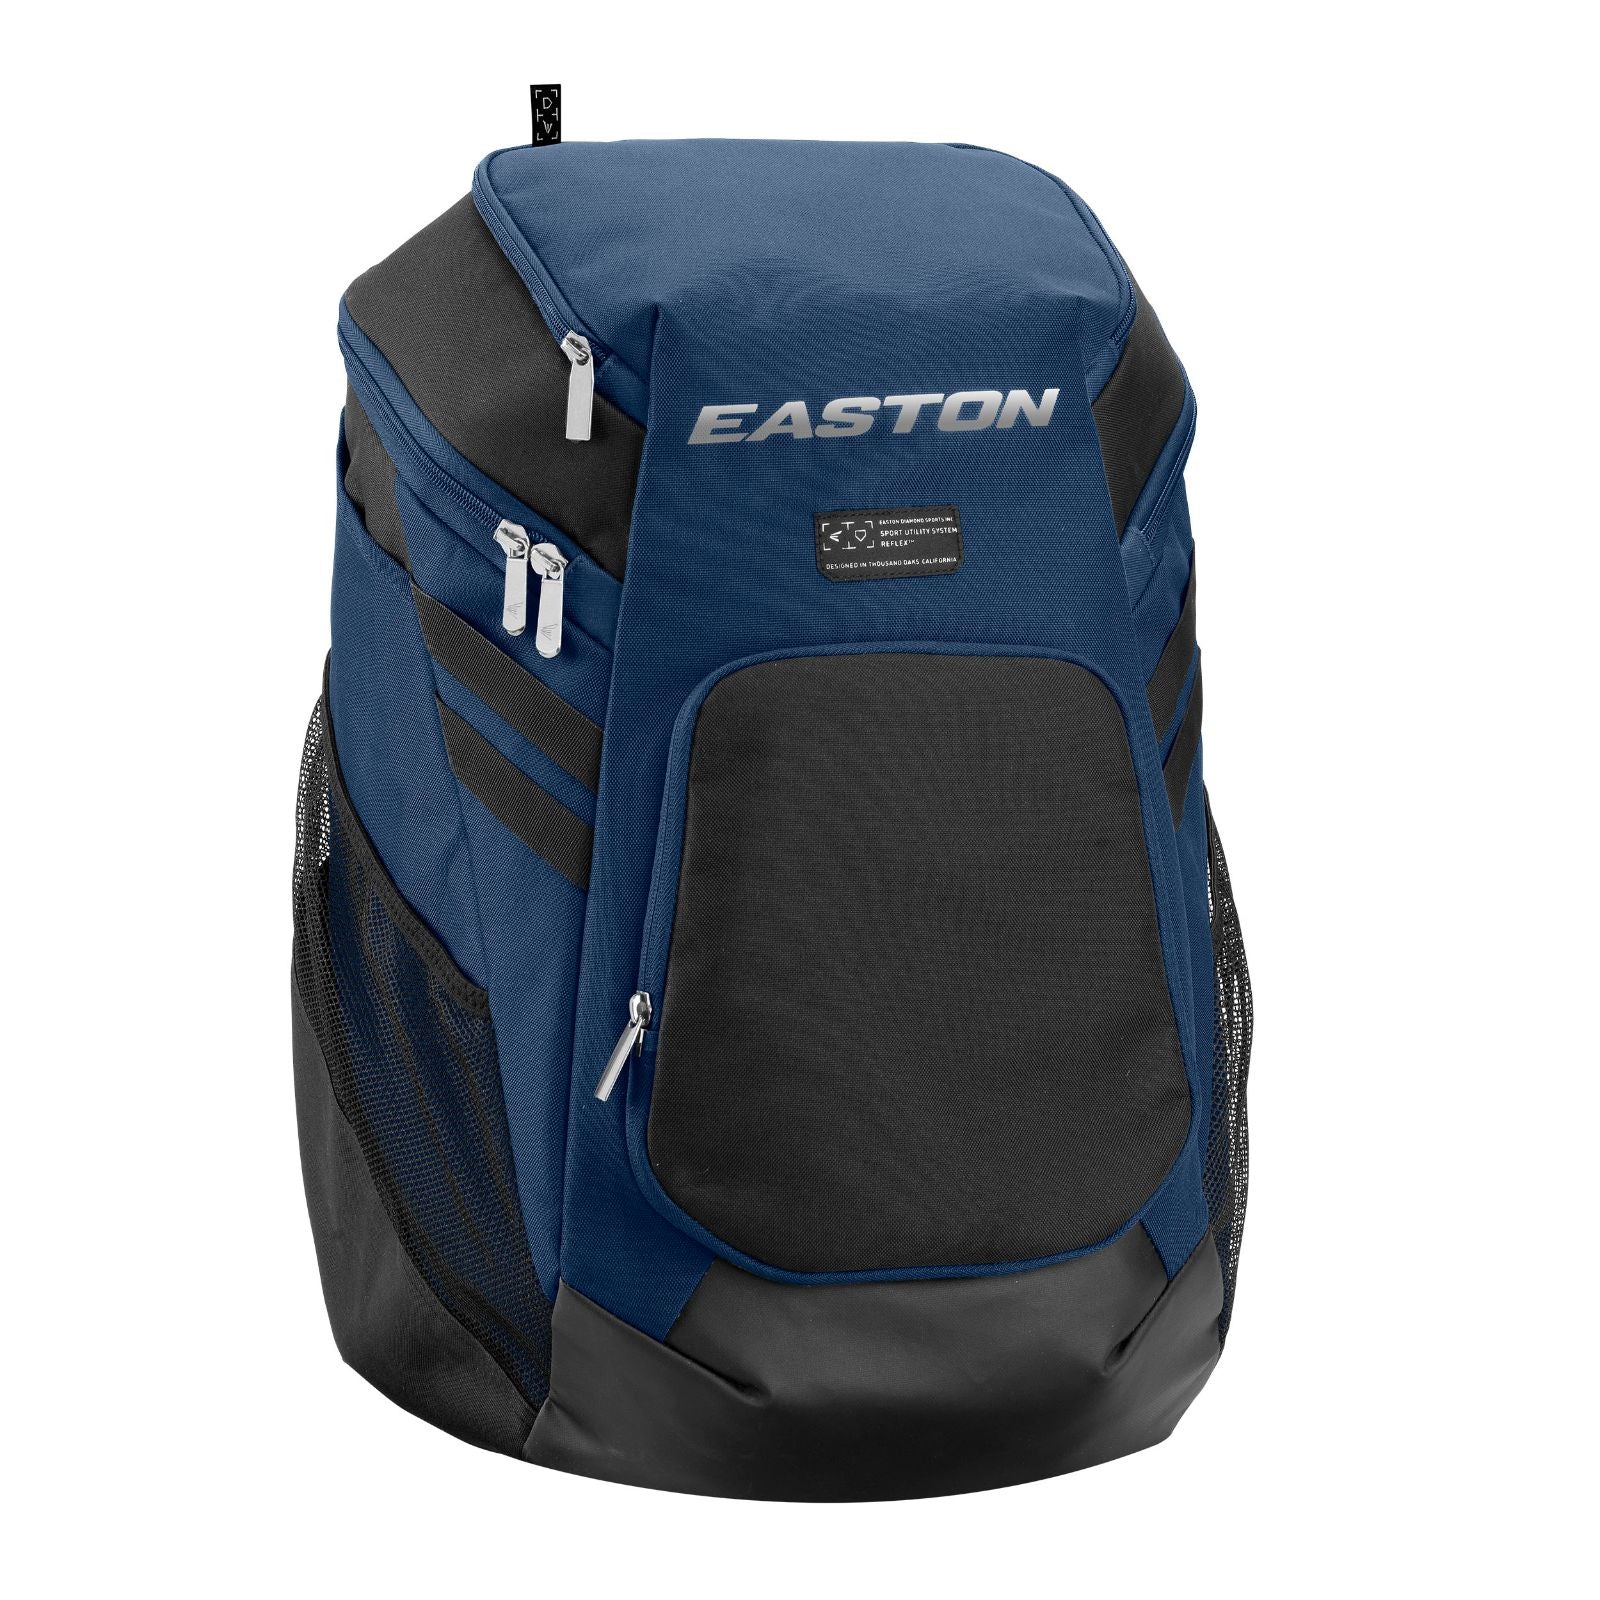 Easton Reflex Baseball Backpack-Navy OutdoorUp